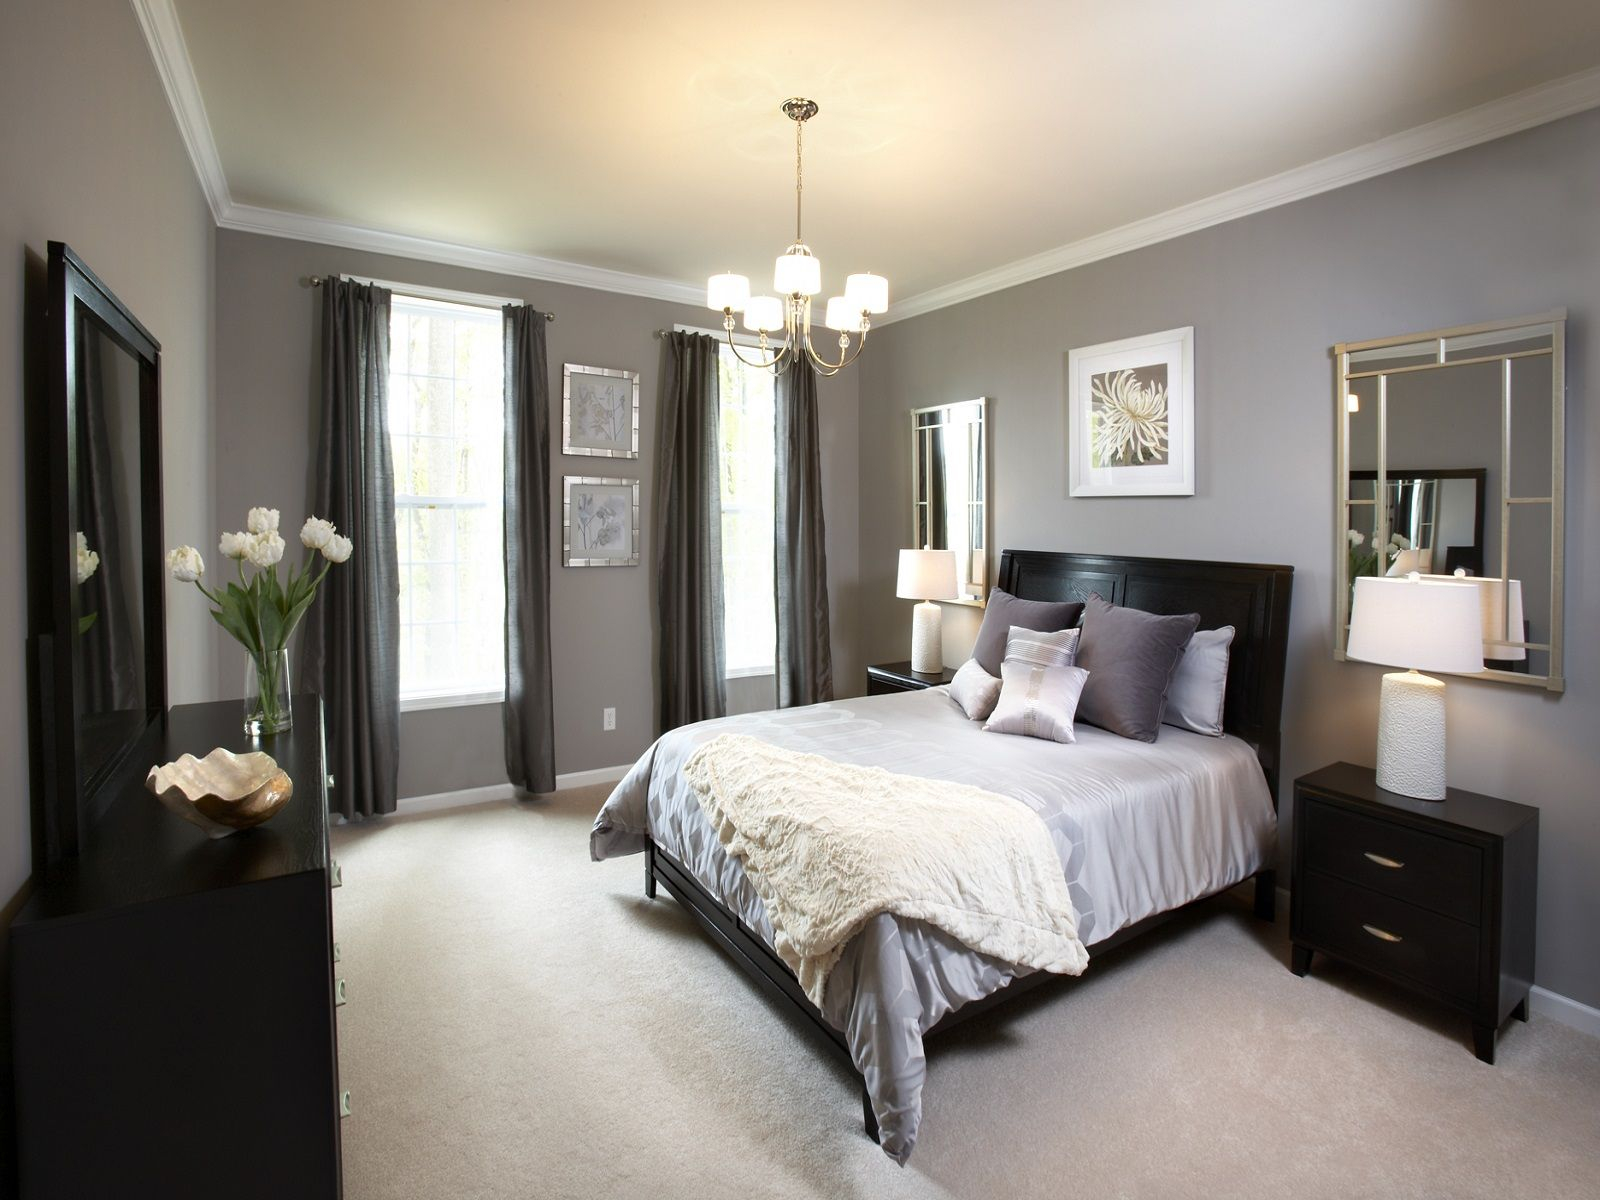 Master Bedroom Paint Colors With Dark Furniture Home regarding measurements 1600 X 1200